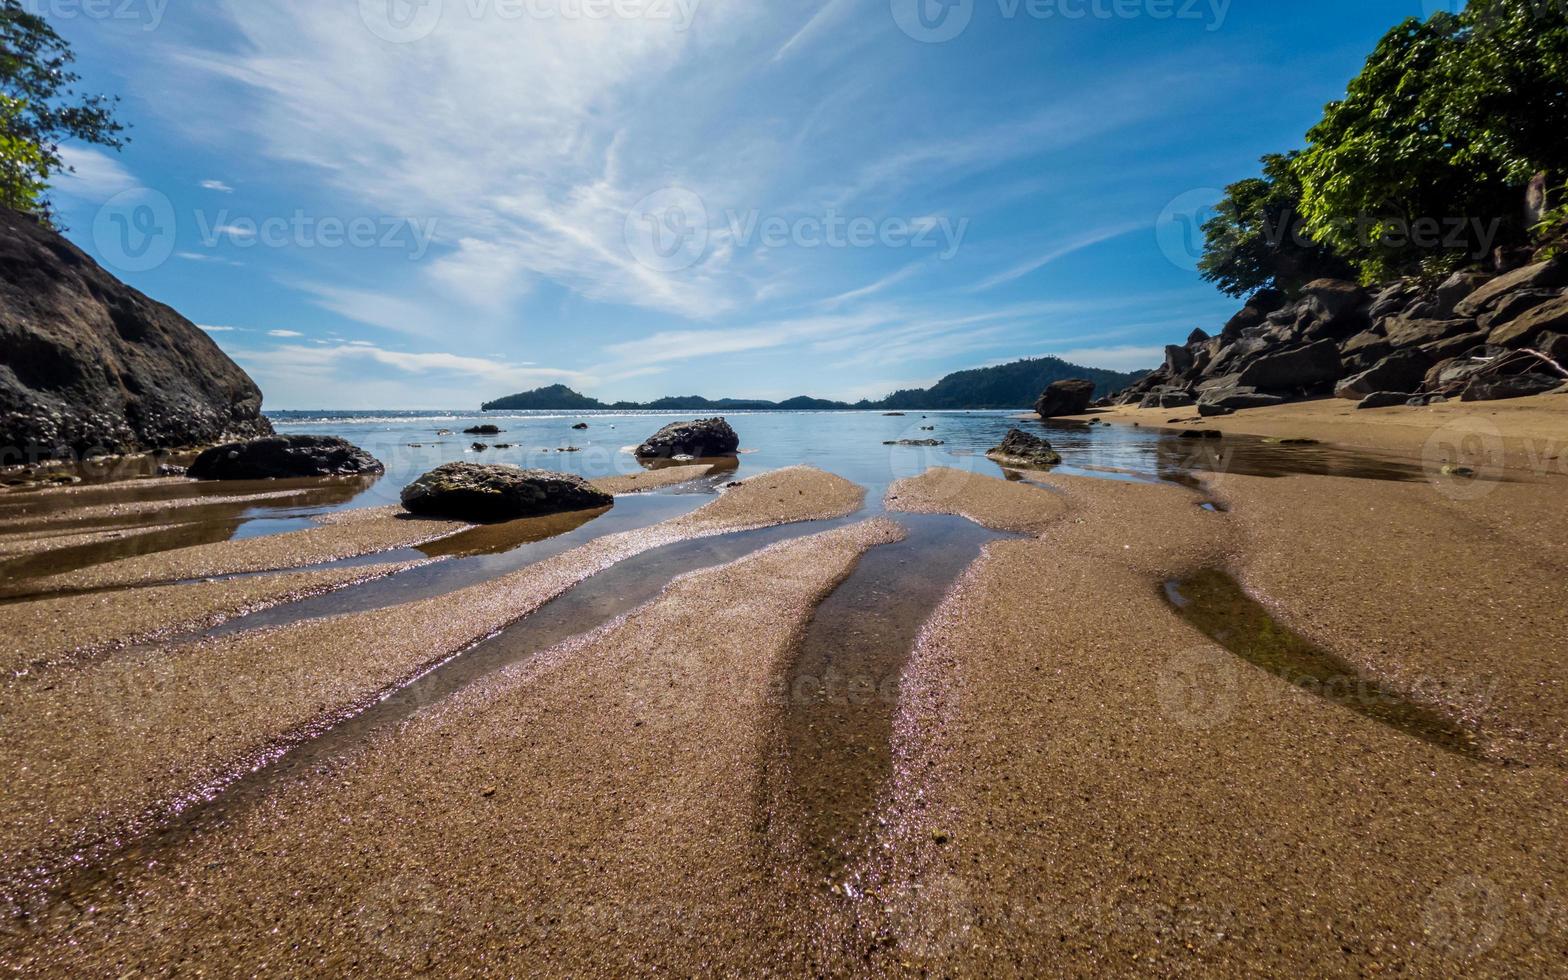 Tropical beach with rocks in West Sumatra coast, Indonesia photo